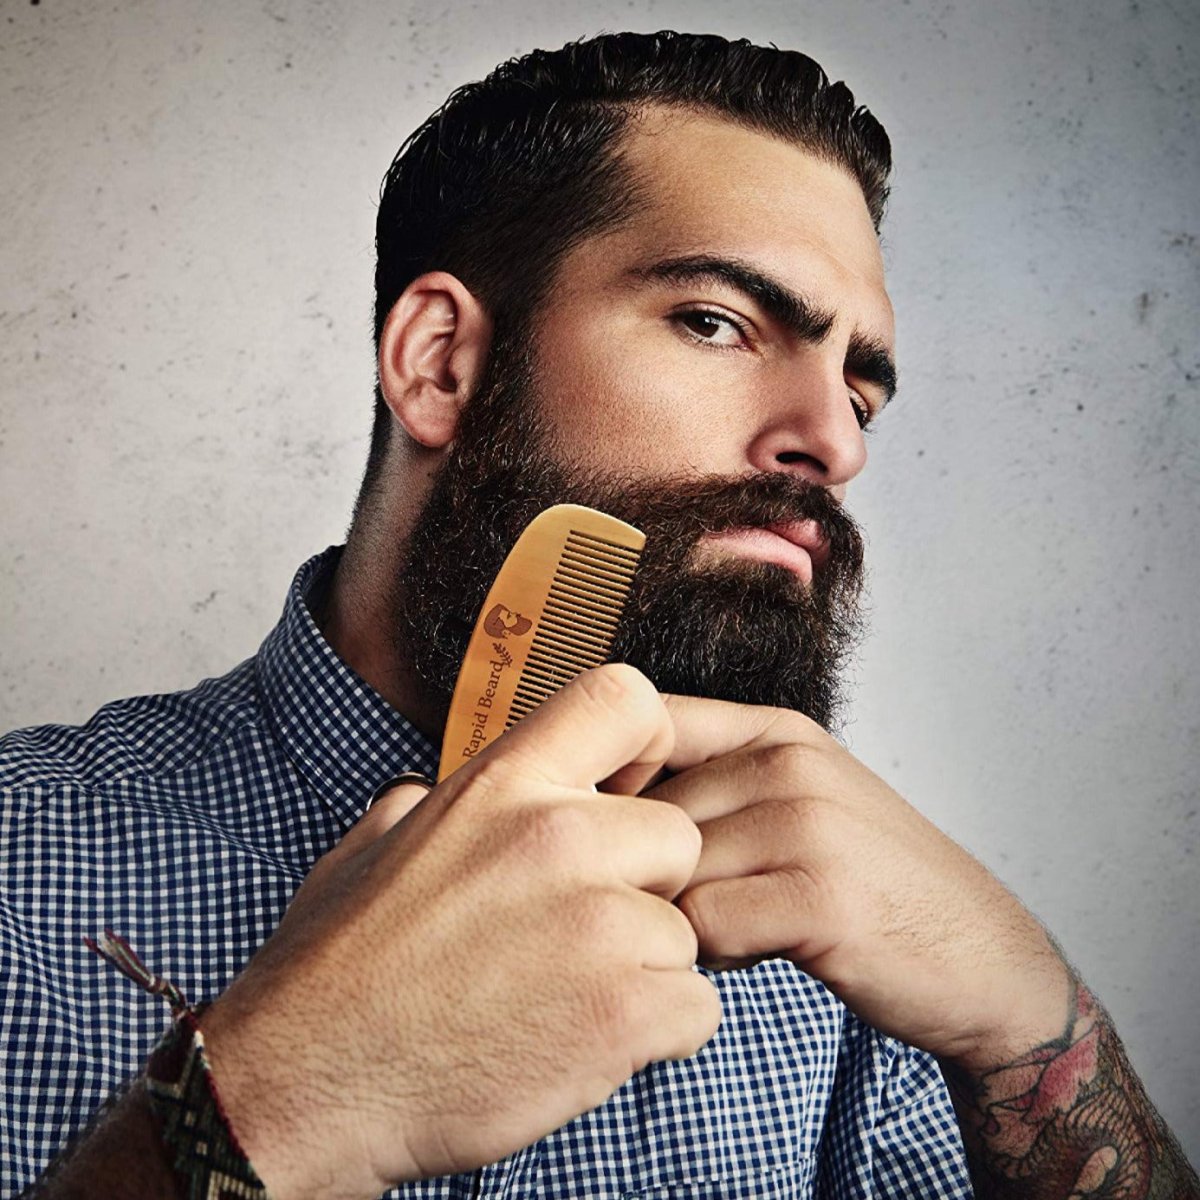 Beard & Mustache Grooming Gift Set Kit for Him - Kalyn & Co. Beard Conditioners & Oils